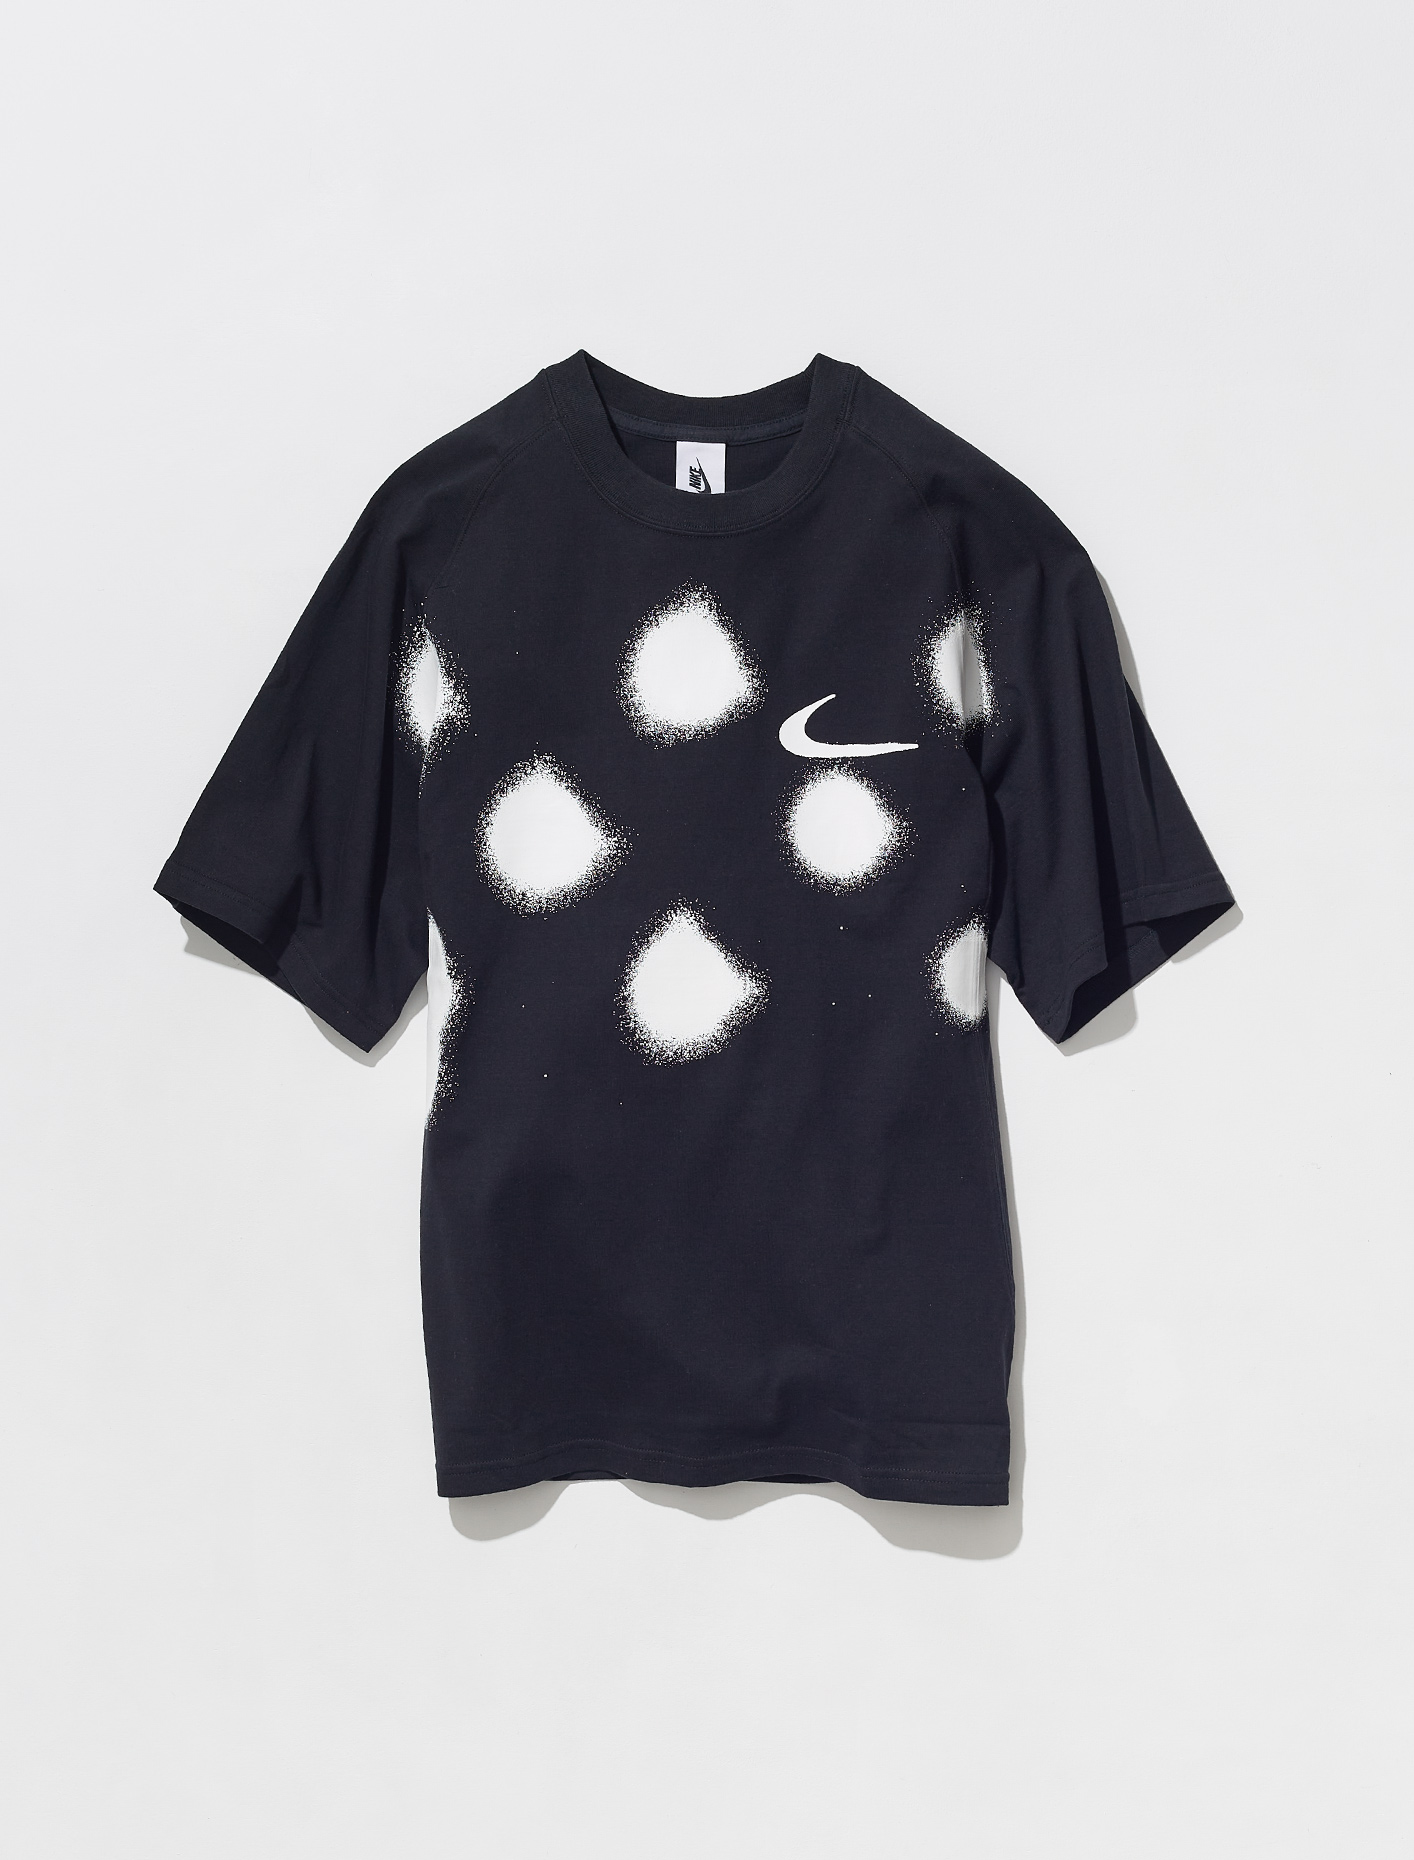 Nike x Off-White T-Shirt in Black | Voo Store Berlin | Worldwide Shipping